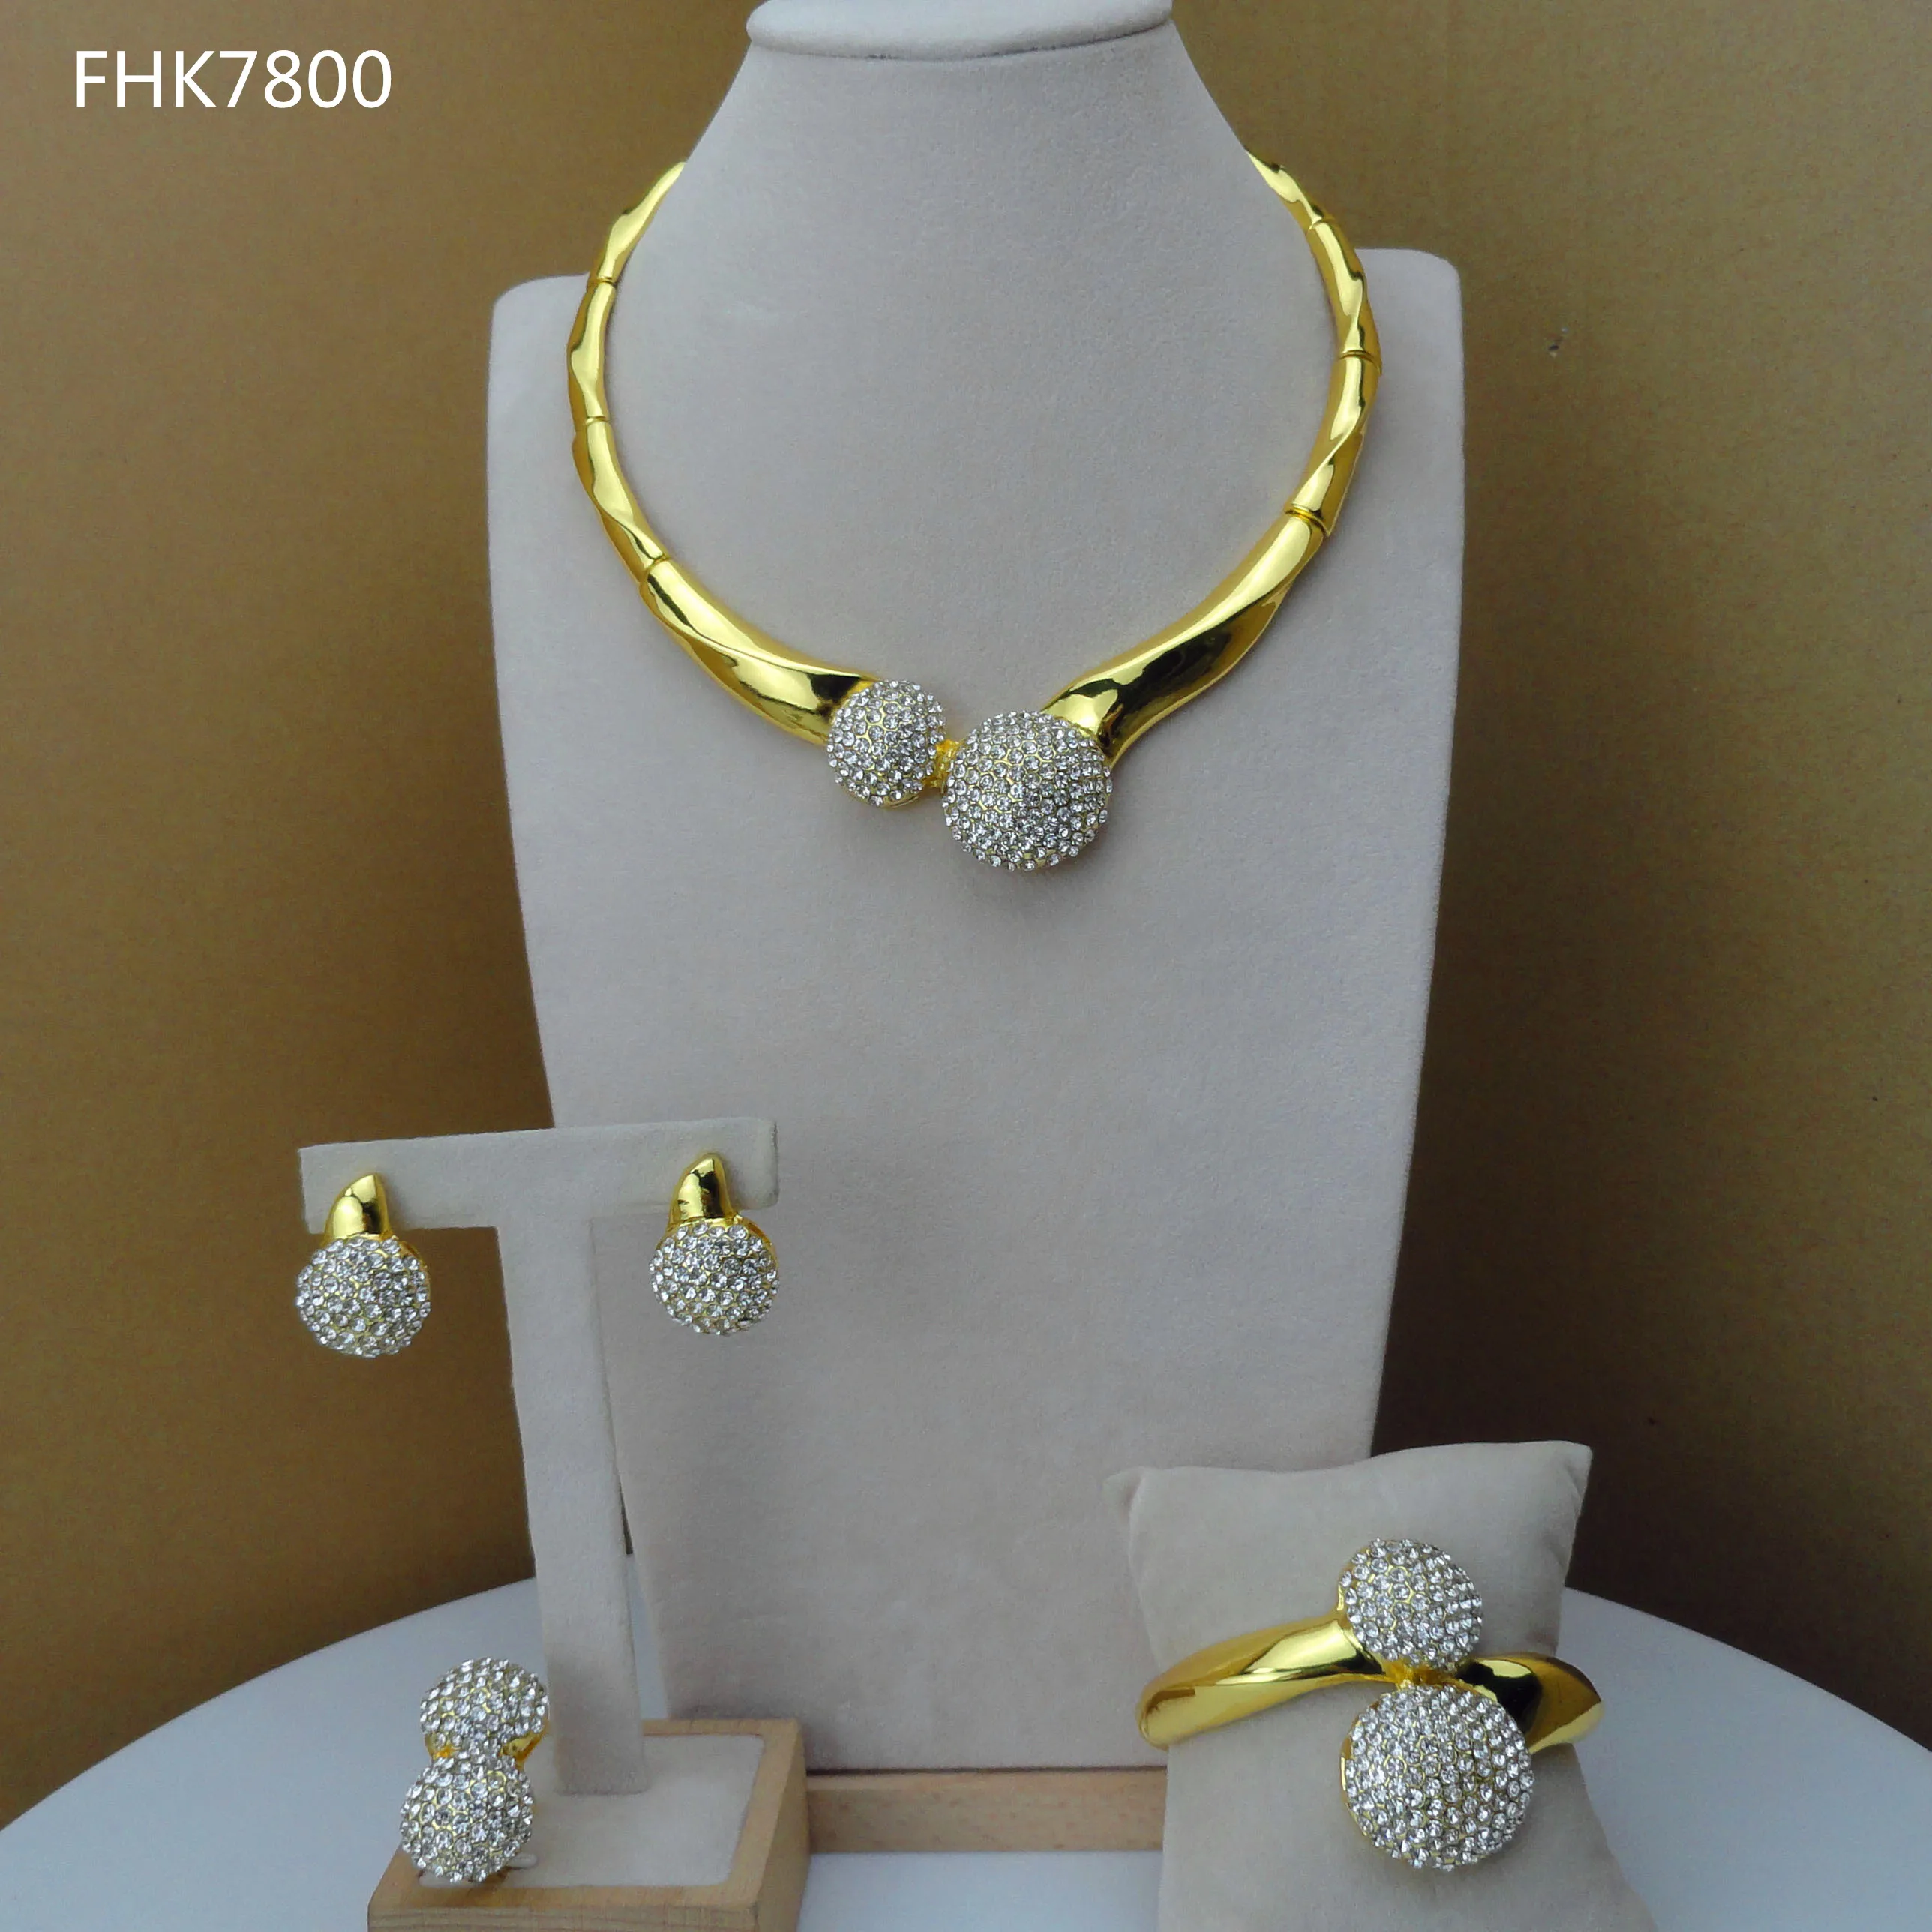  African Fashion Jewelry Sets Dubai Costume Jewelry Choker Necklace FHK7800 - $68.06